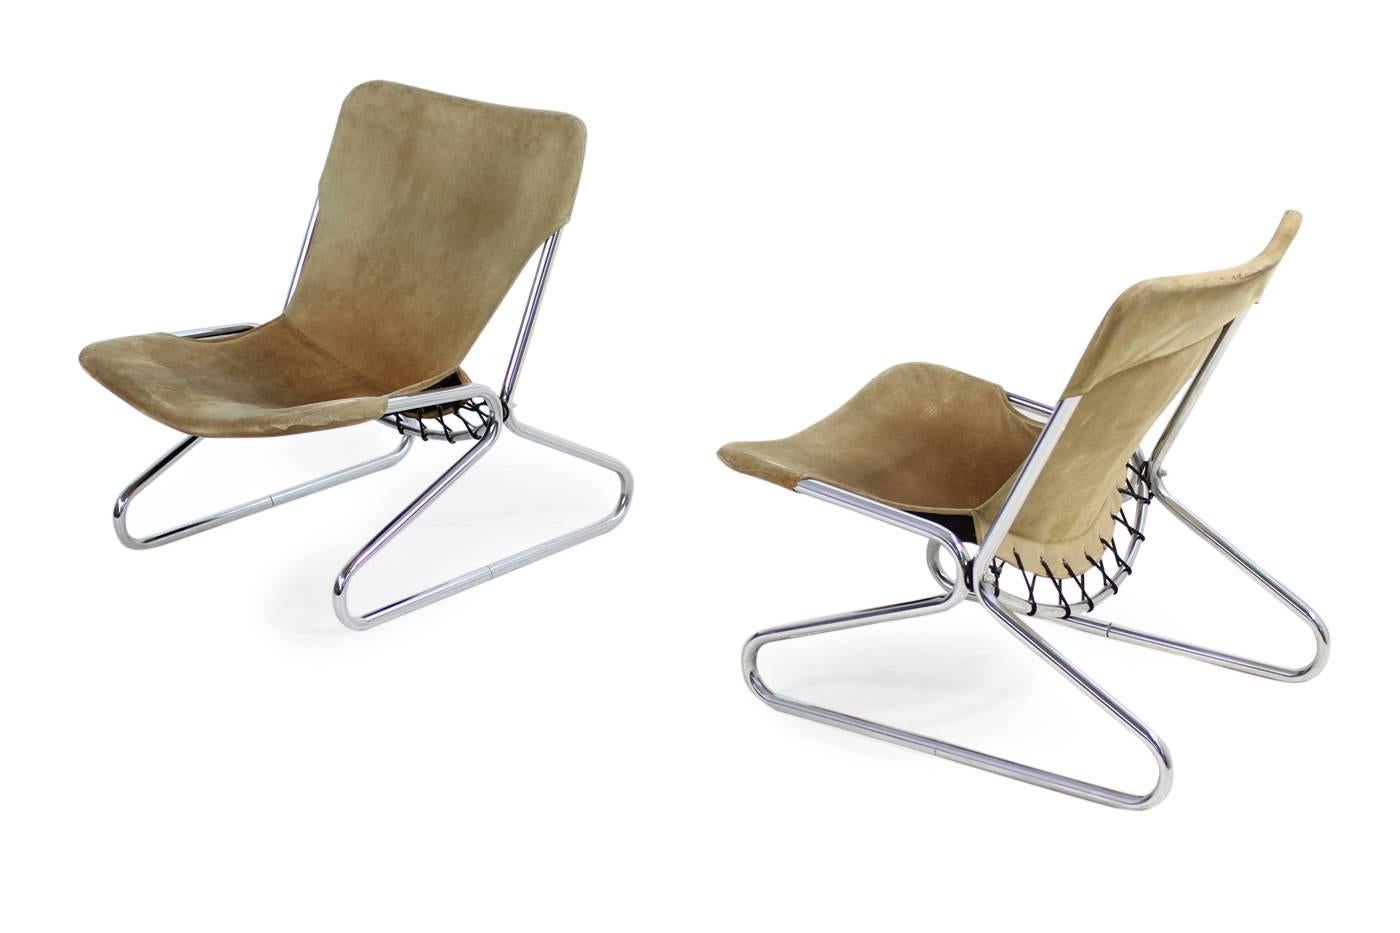 Beautiful pair of 1960s suede leather easy chairs, fantastic design, attrib. to Erik Magnussen, Scandinavian Modern design.